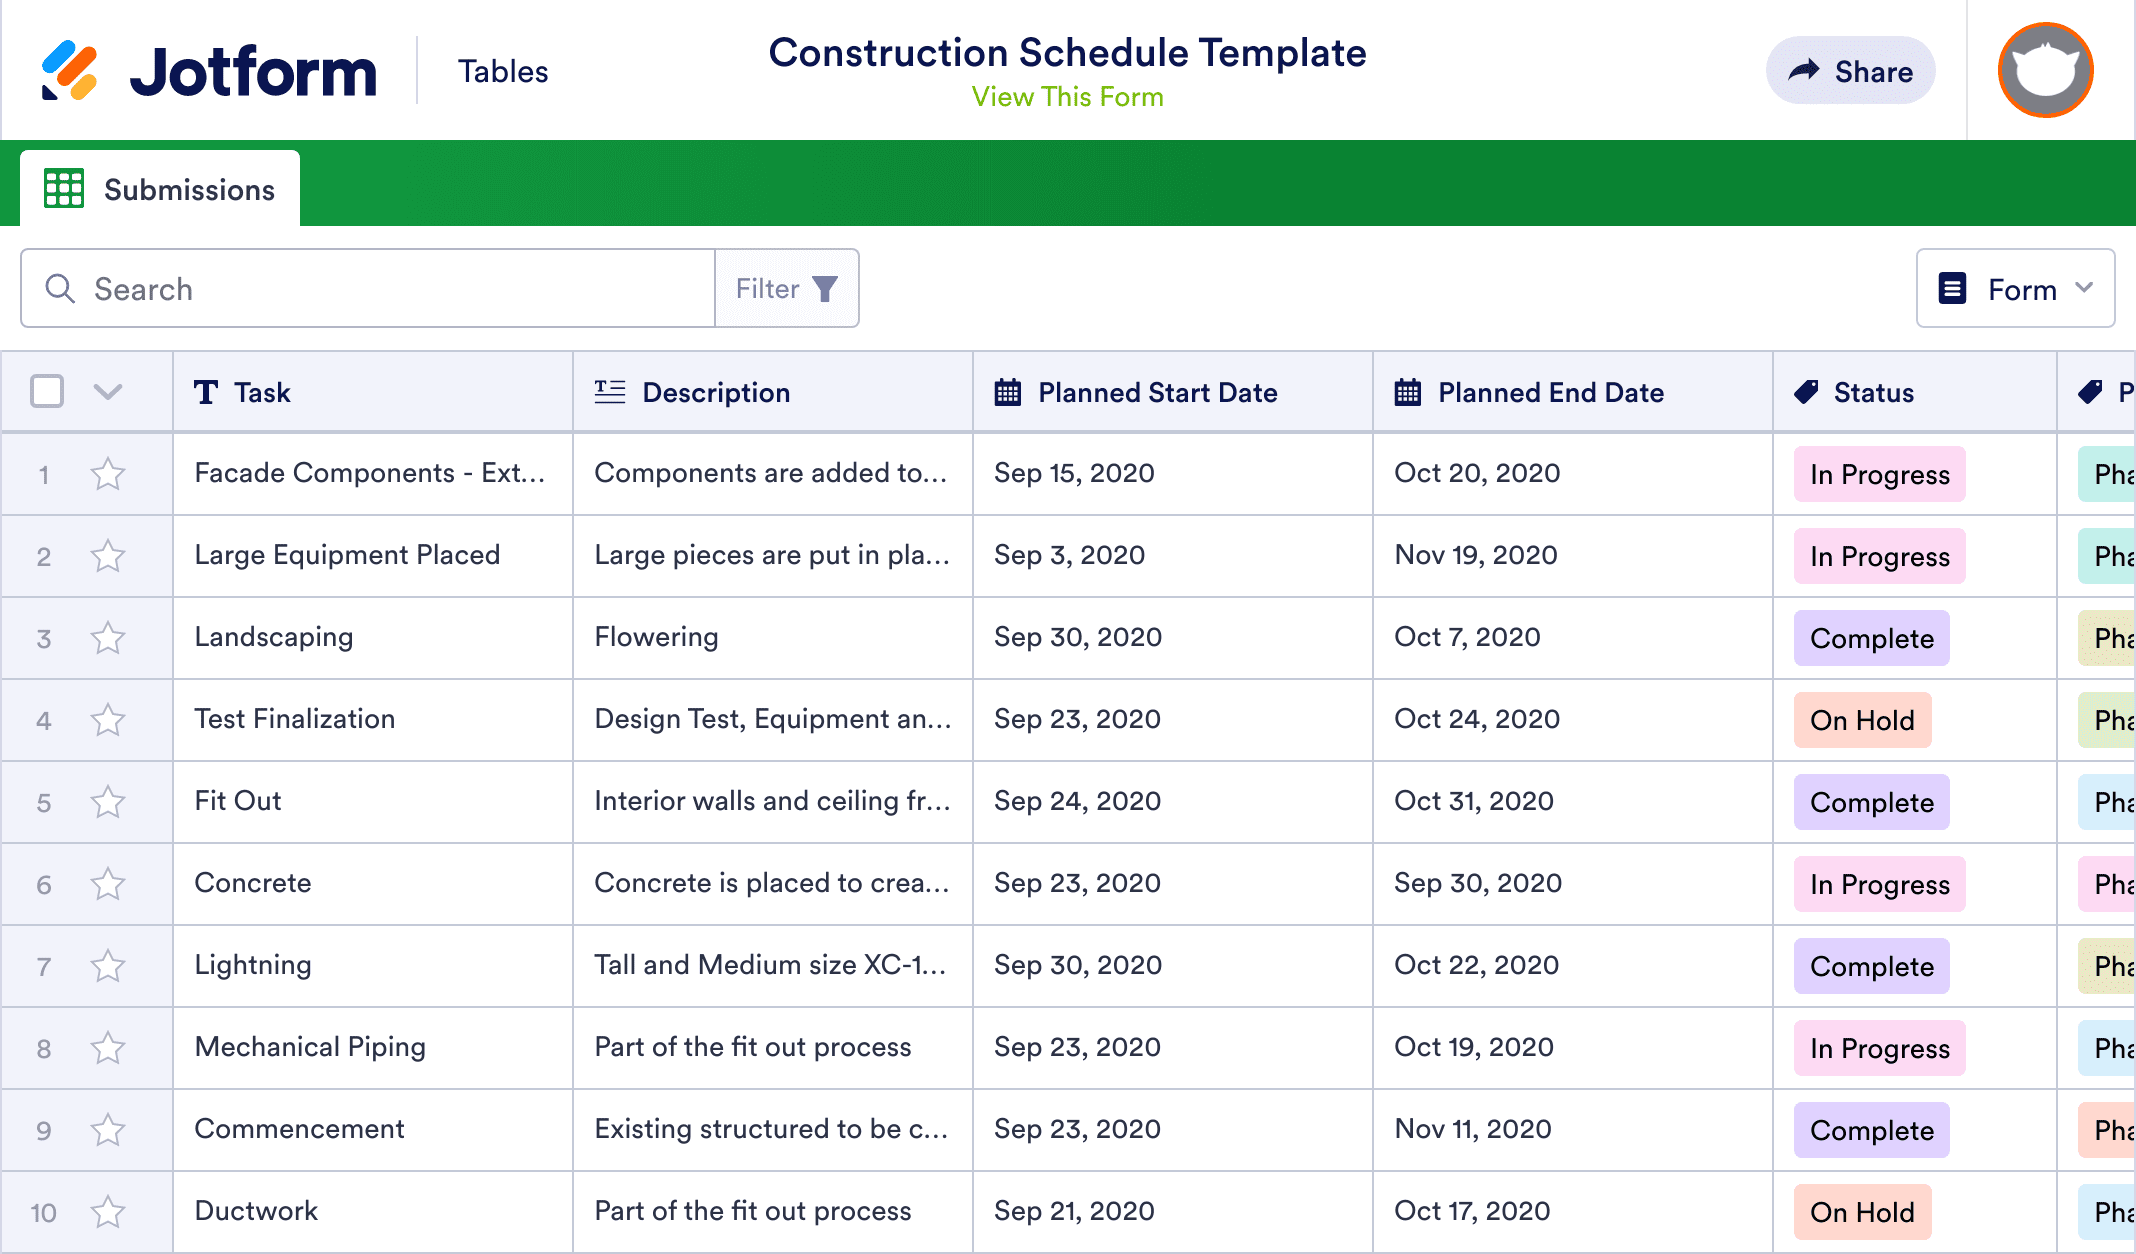 Construction Schedule Template